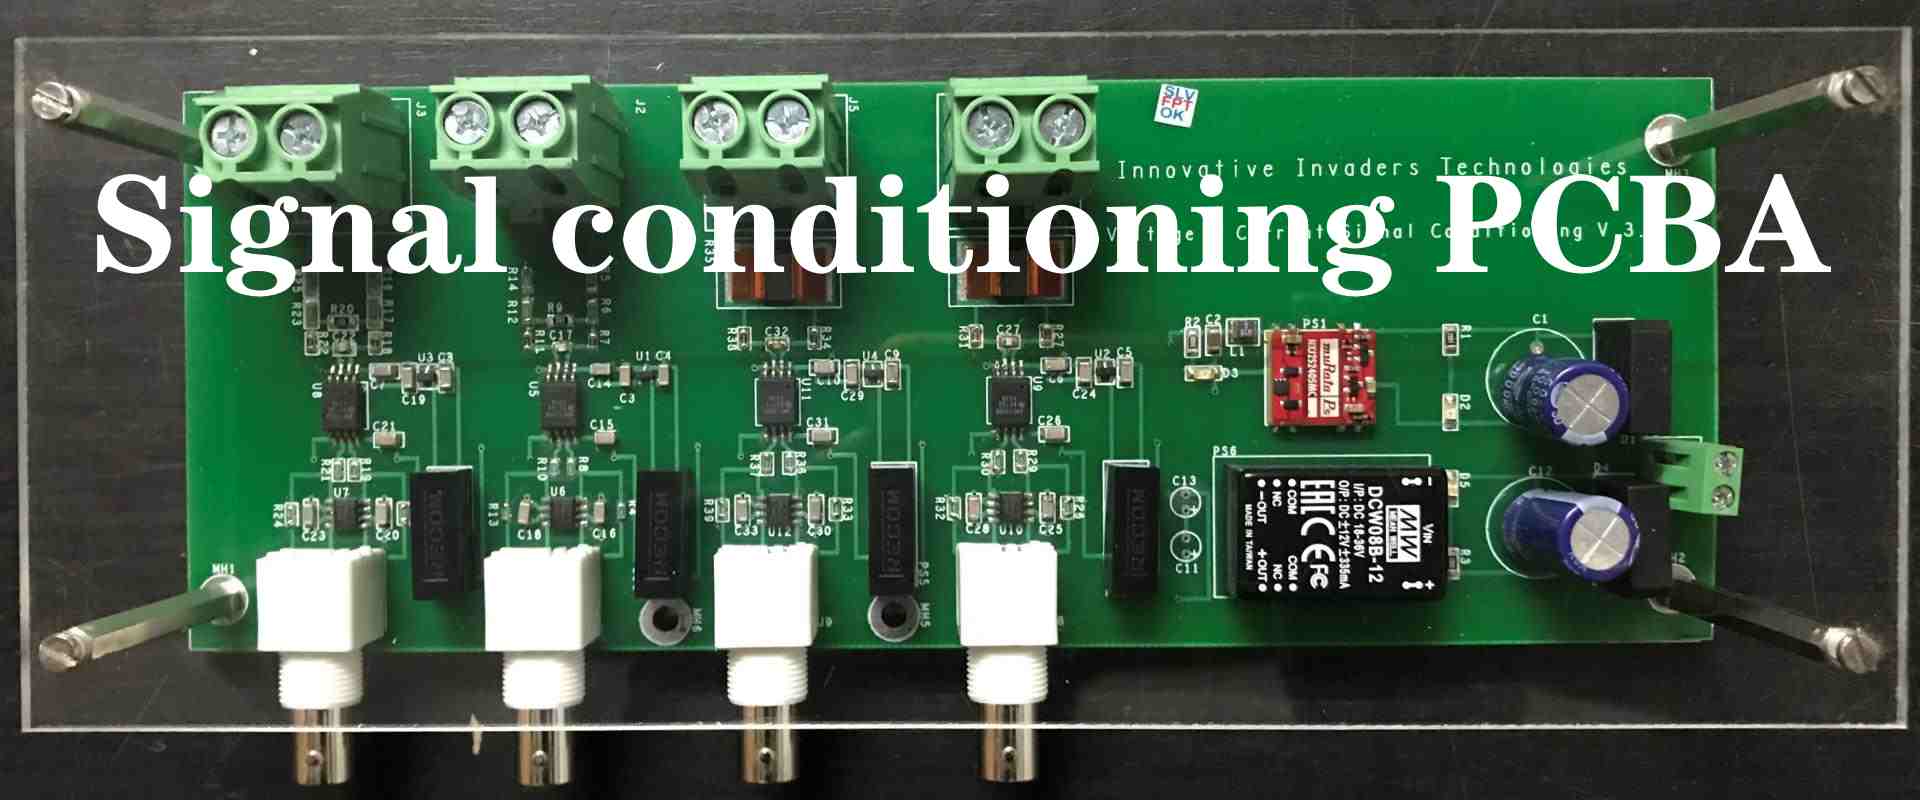 Signal-conditioning-PCBA-1